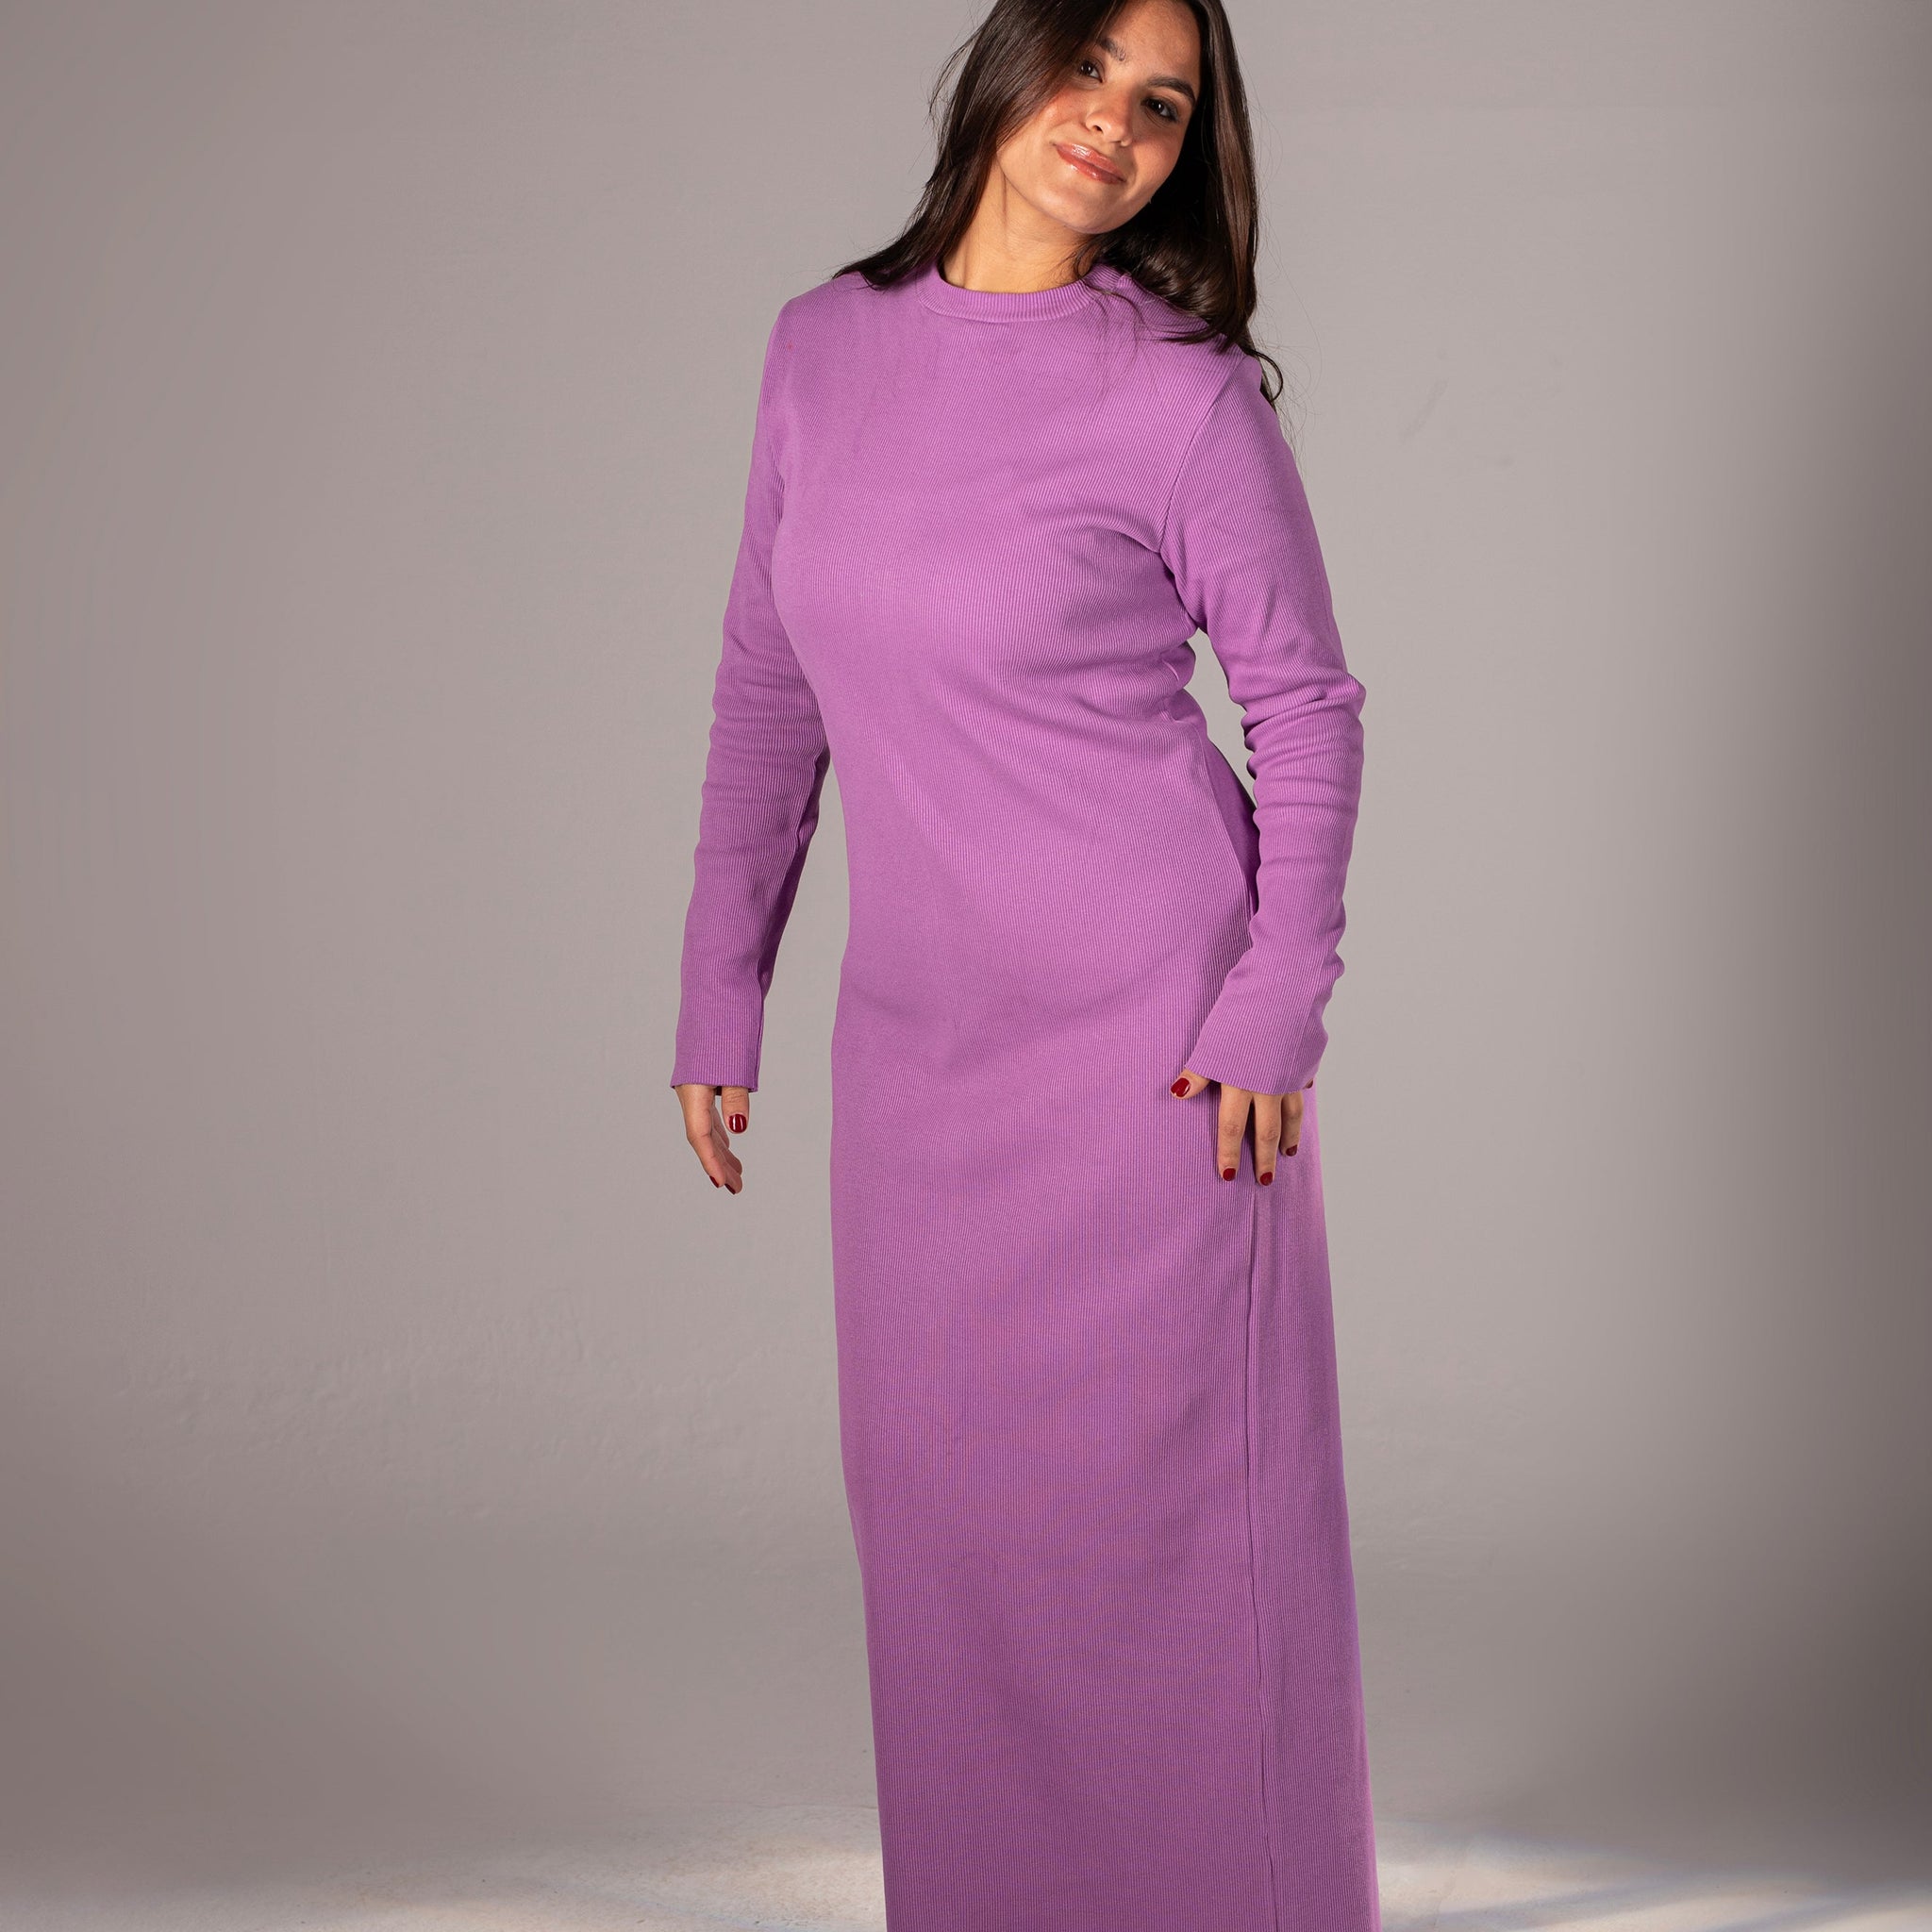 Purple Besic Dress